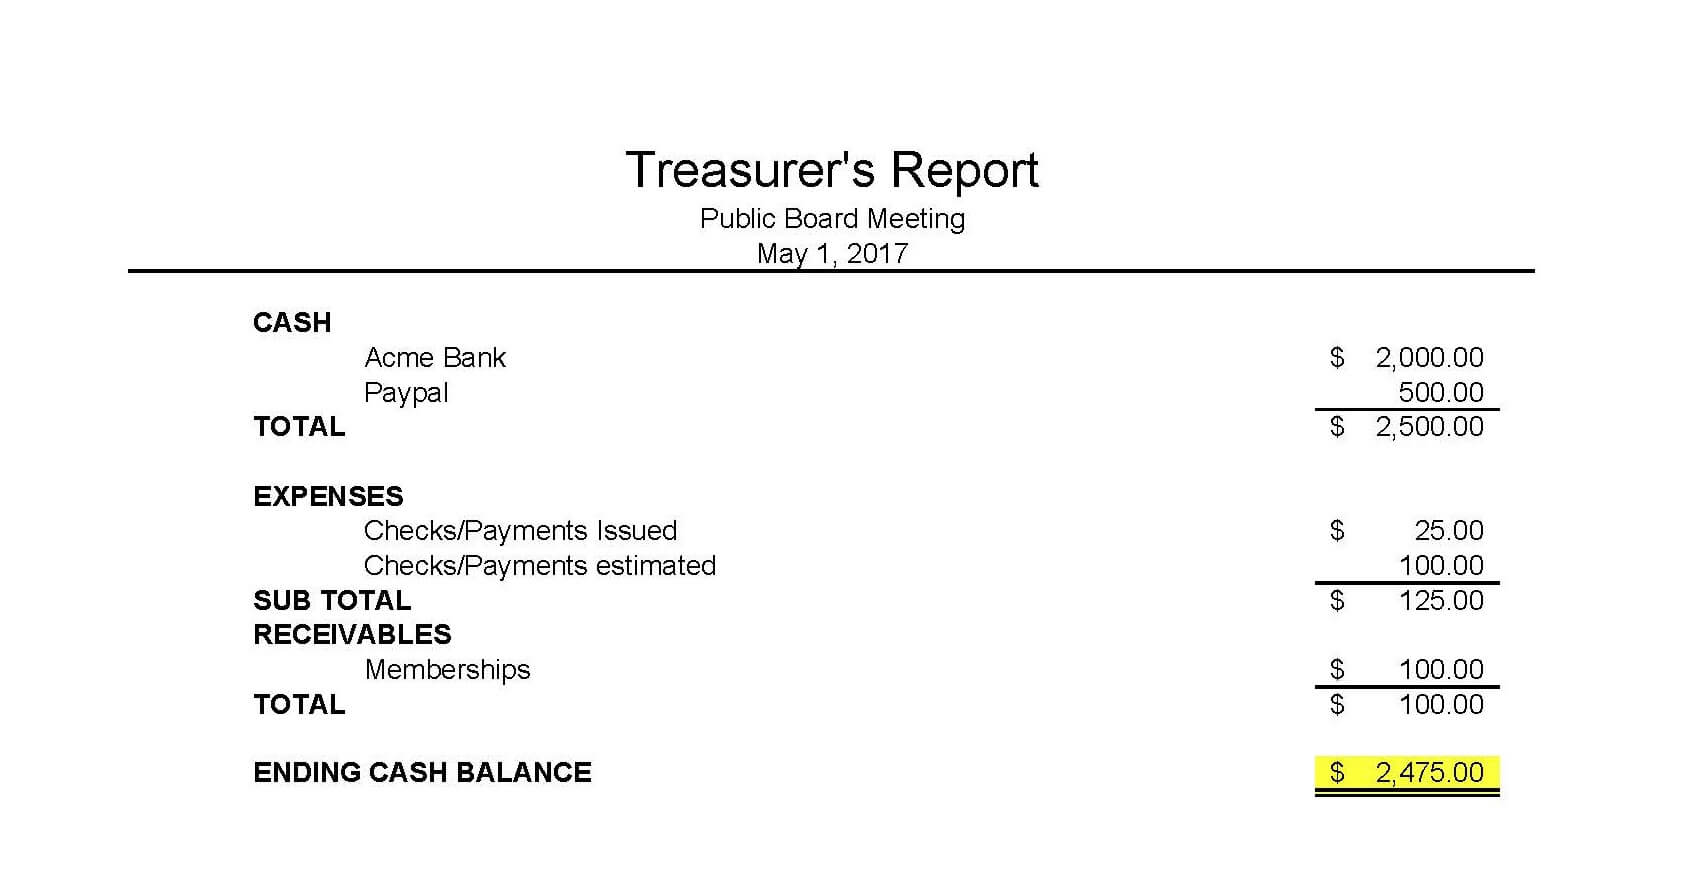 009 Treasurer Report Template Non Profit Sample Club For Non Profit Treasurer Report Template